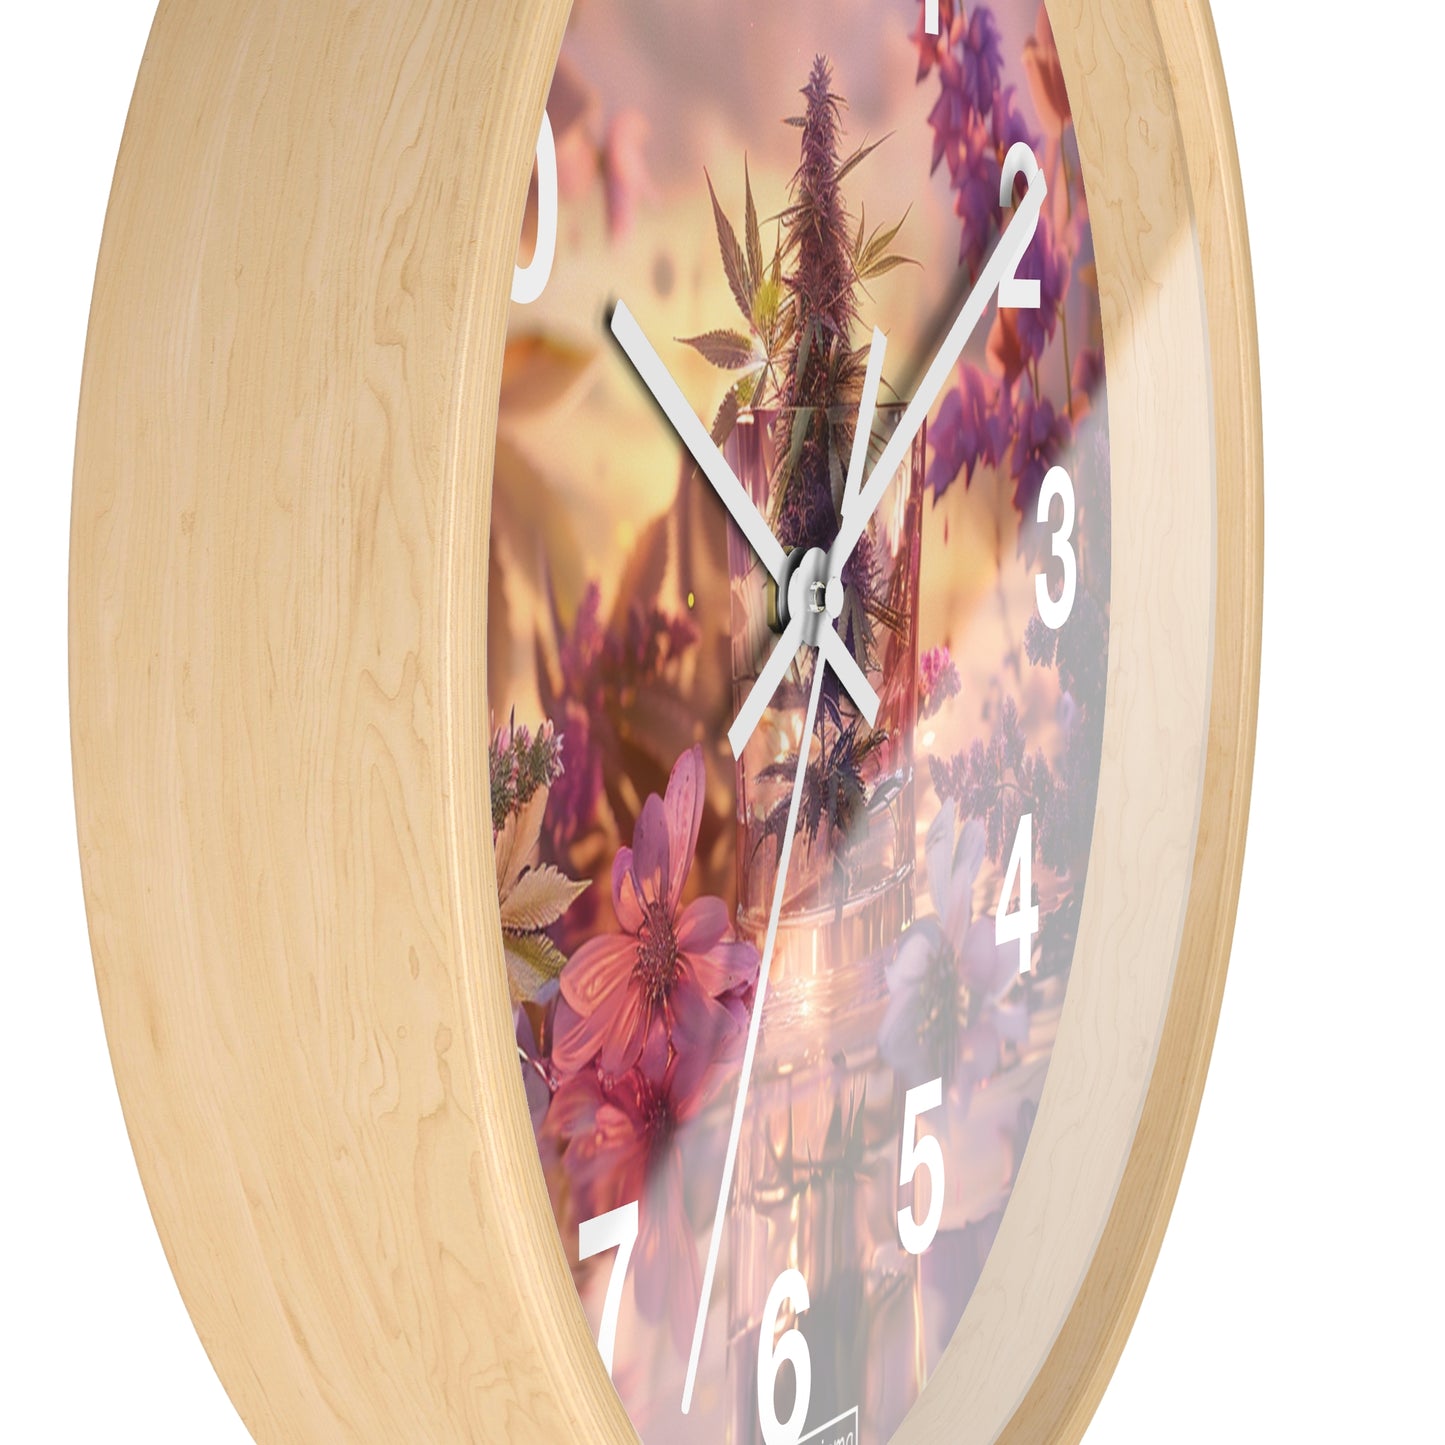 Change the Stigma GLASS OF FLOWER Weed Clock